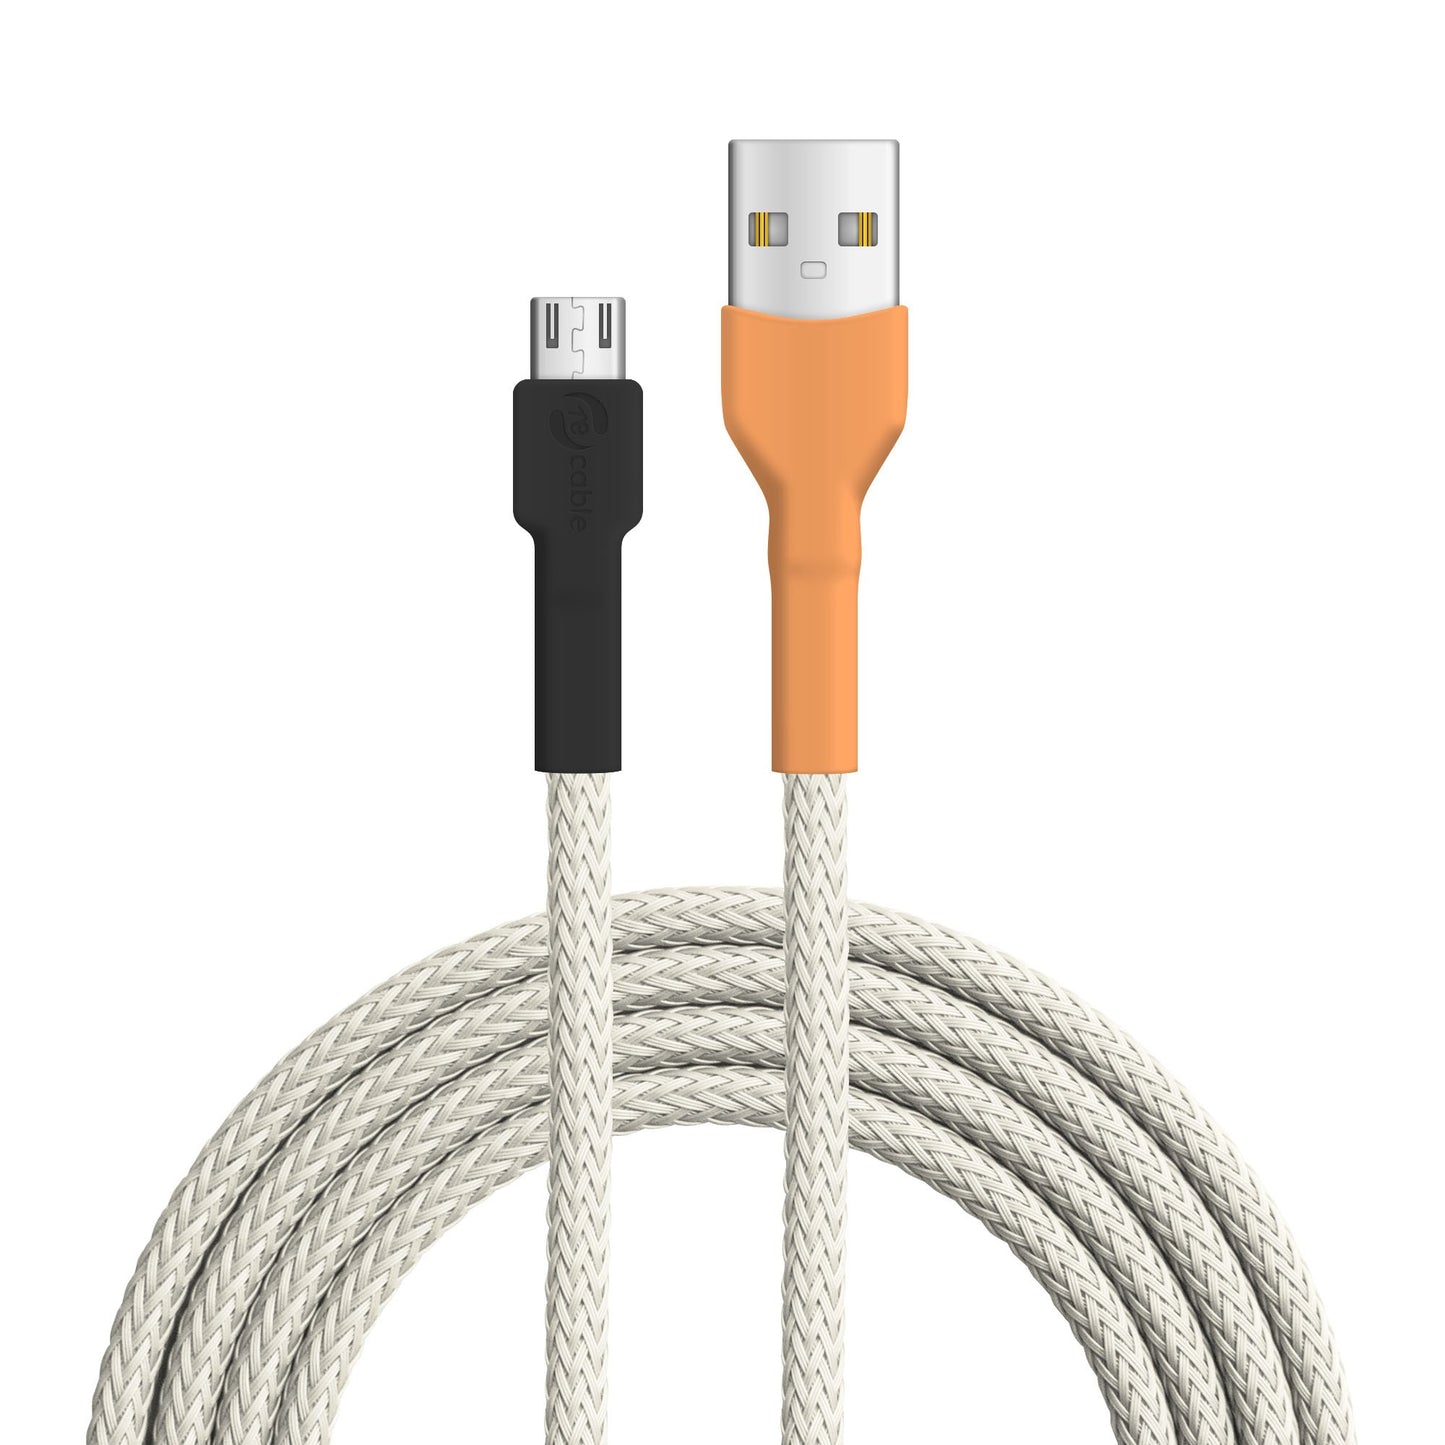 USB-Kabel, Design: Königs­pinguin, Anschlüsse: USB A auf Micro-USB